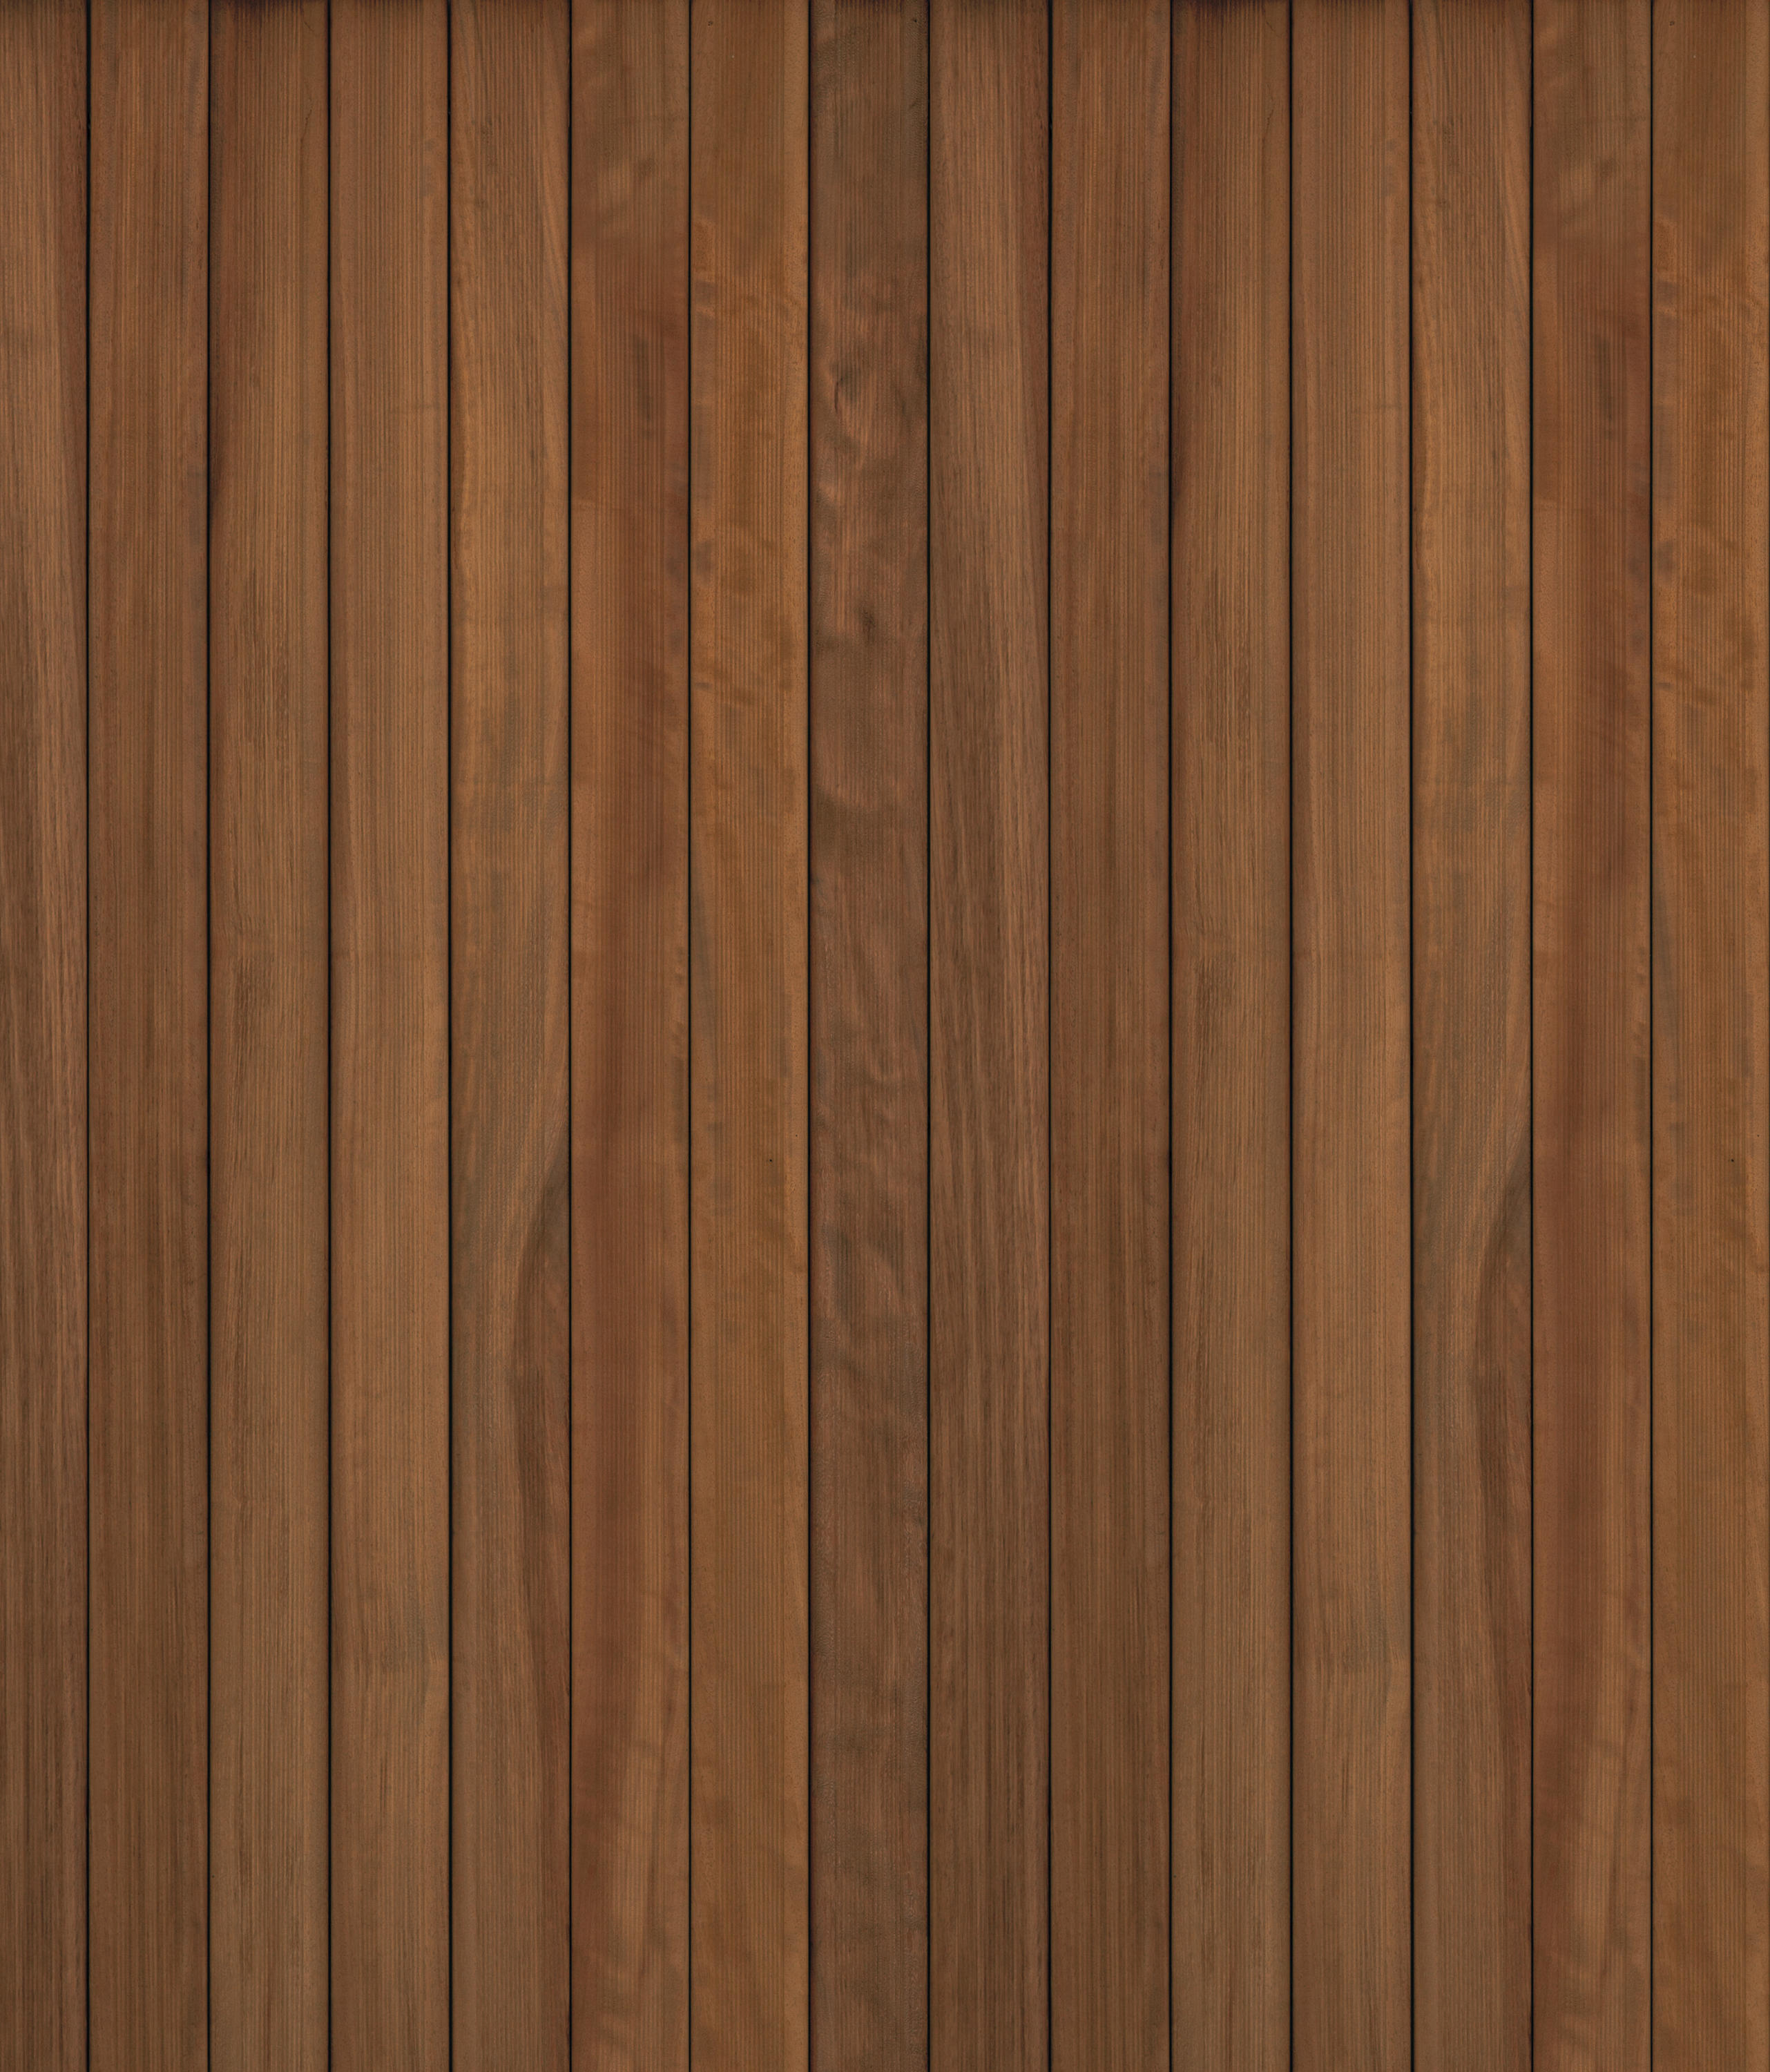 decking wood decking ipè by xilo1934 | wood flooring ... RZVTBFV